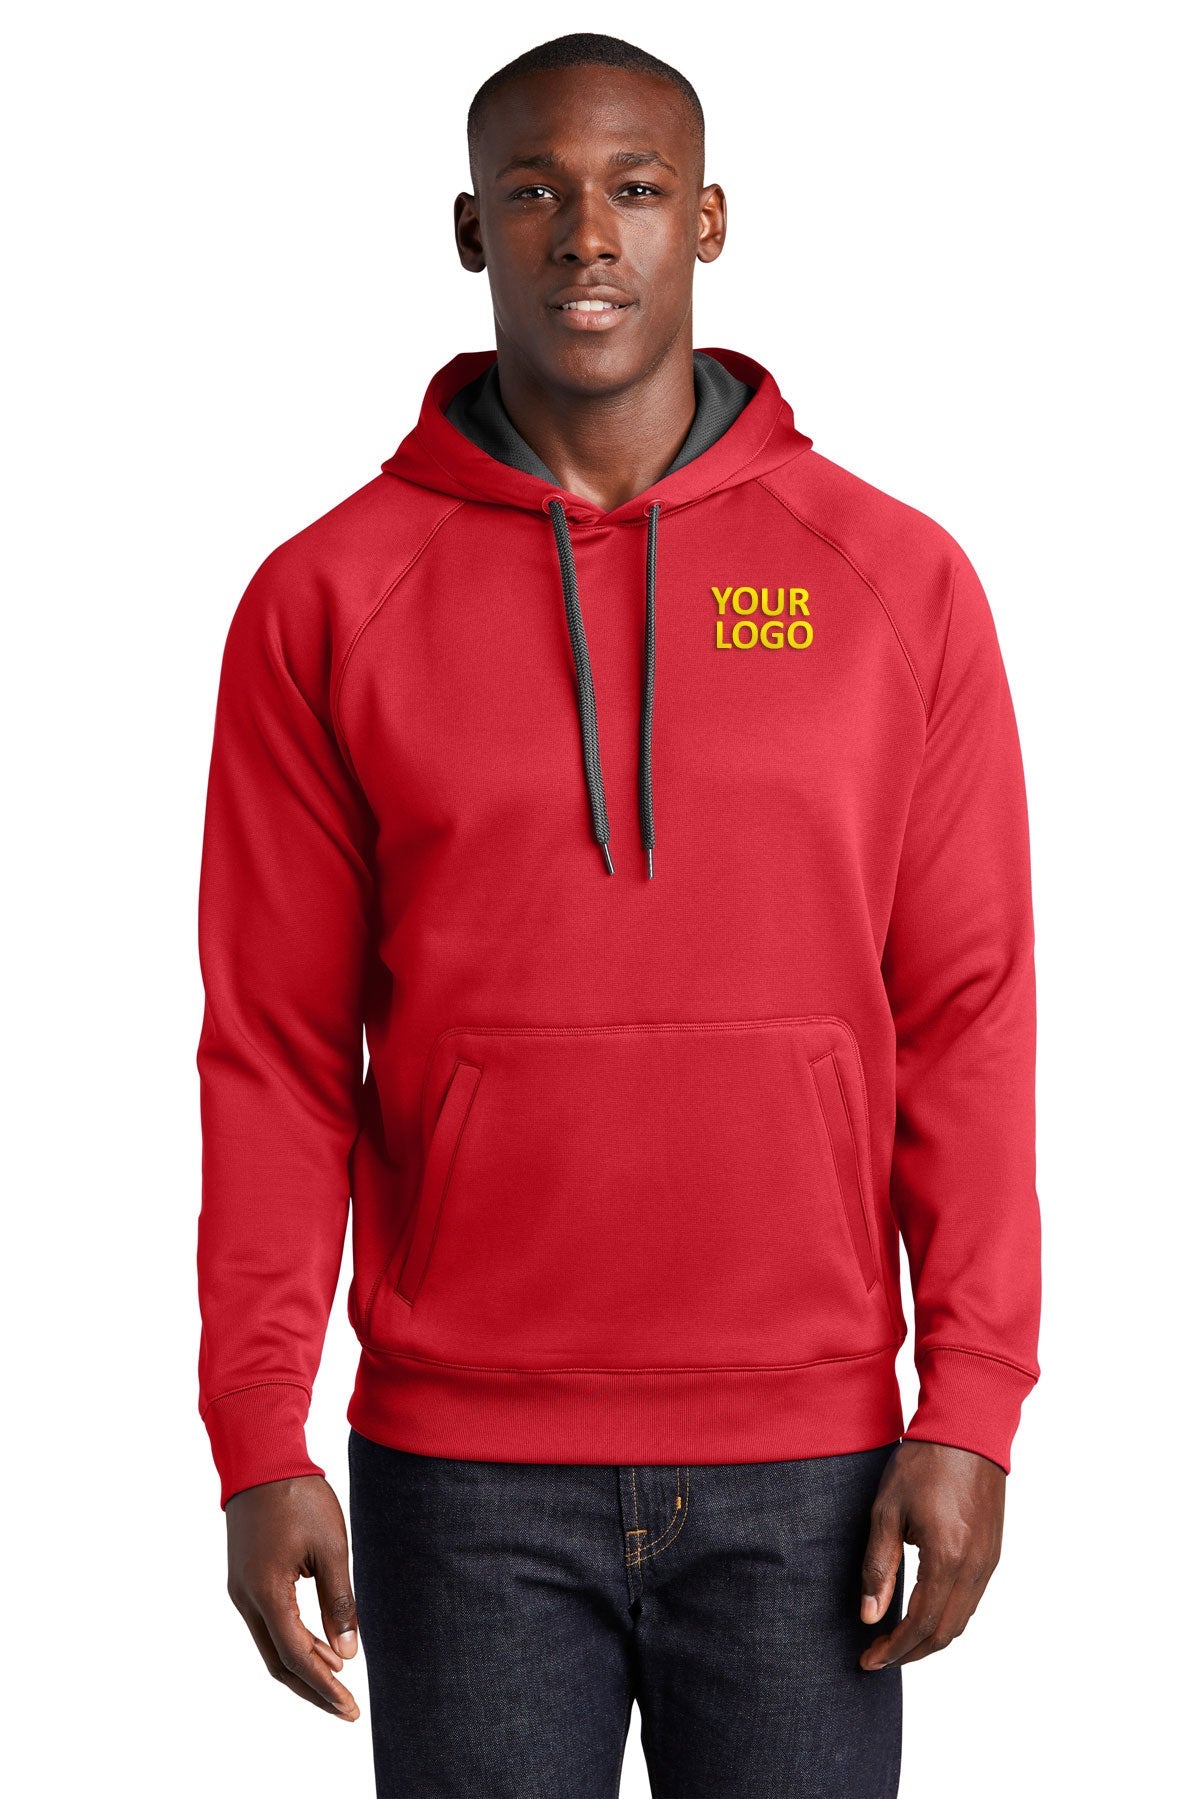 Sport-Tek True Red ST250 custom logo sweatshirts